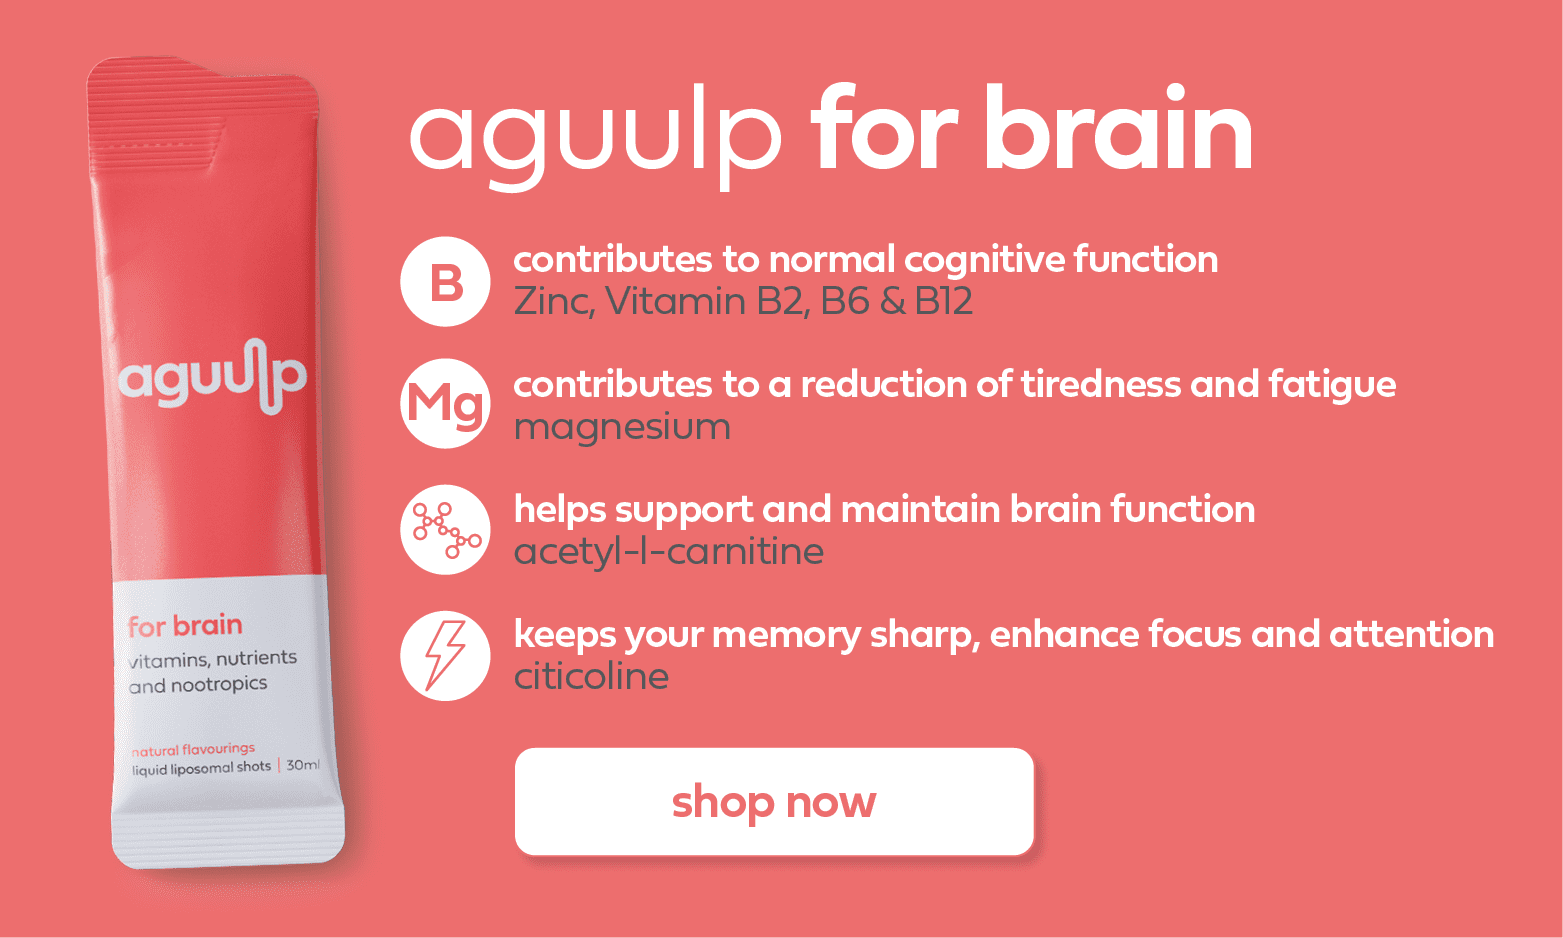 aguulp for brain liquid supplement - how can it help with brain fog | aguulp